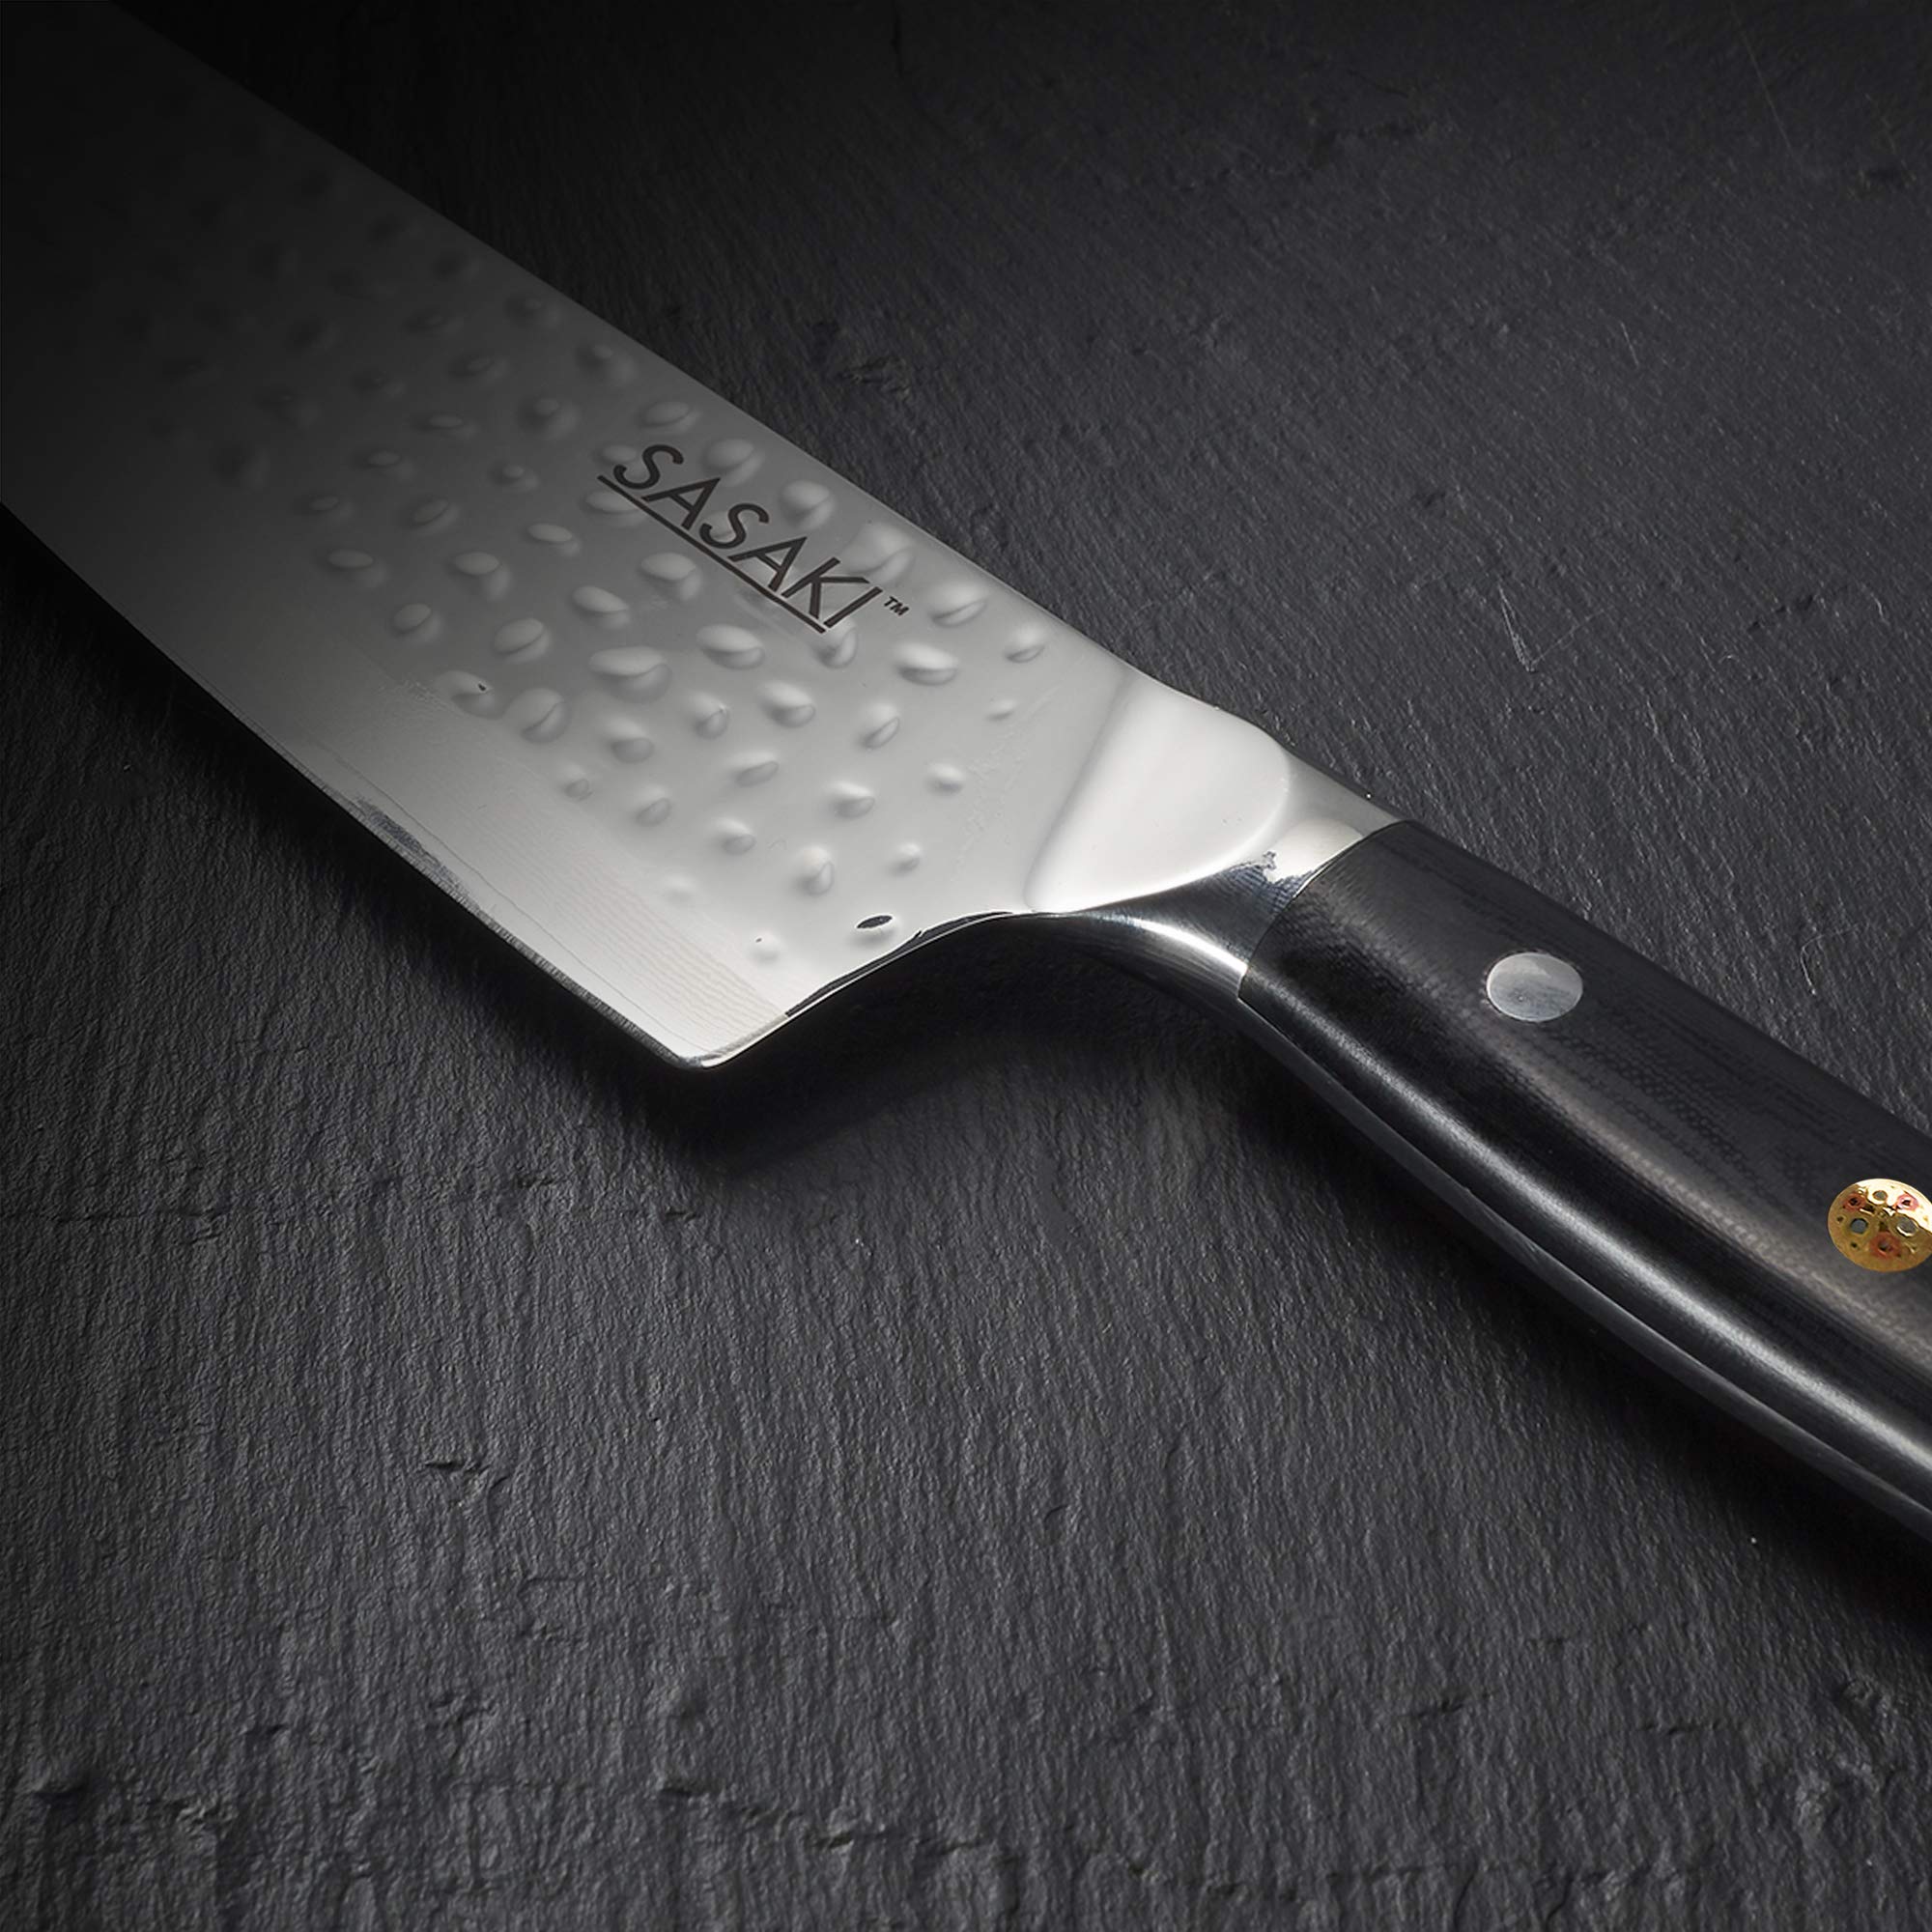 Sasaki Takumi Japanese AUS-10 Stainless Steel Chef Knife with Locking Sheath, 8-Inch, Black